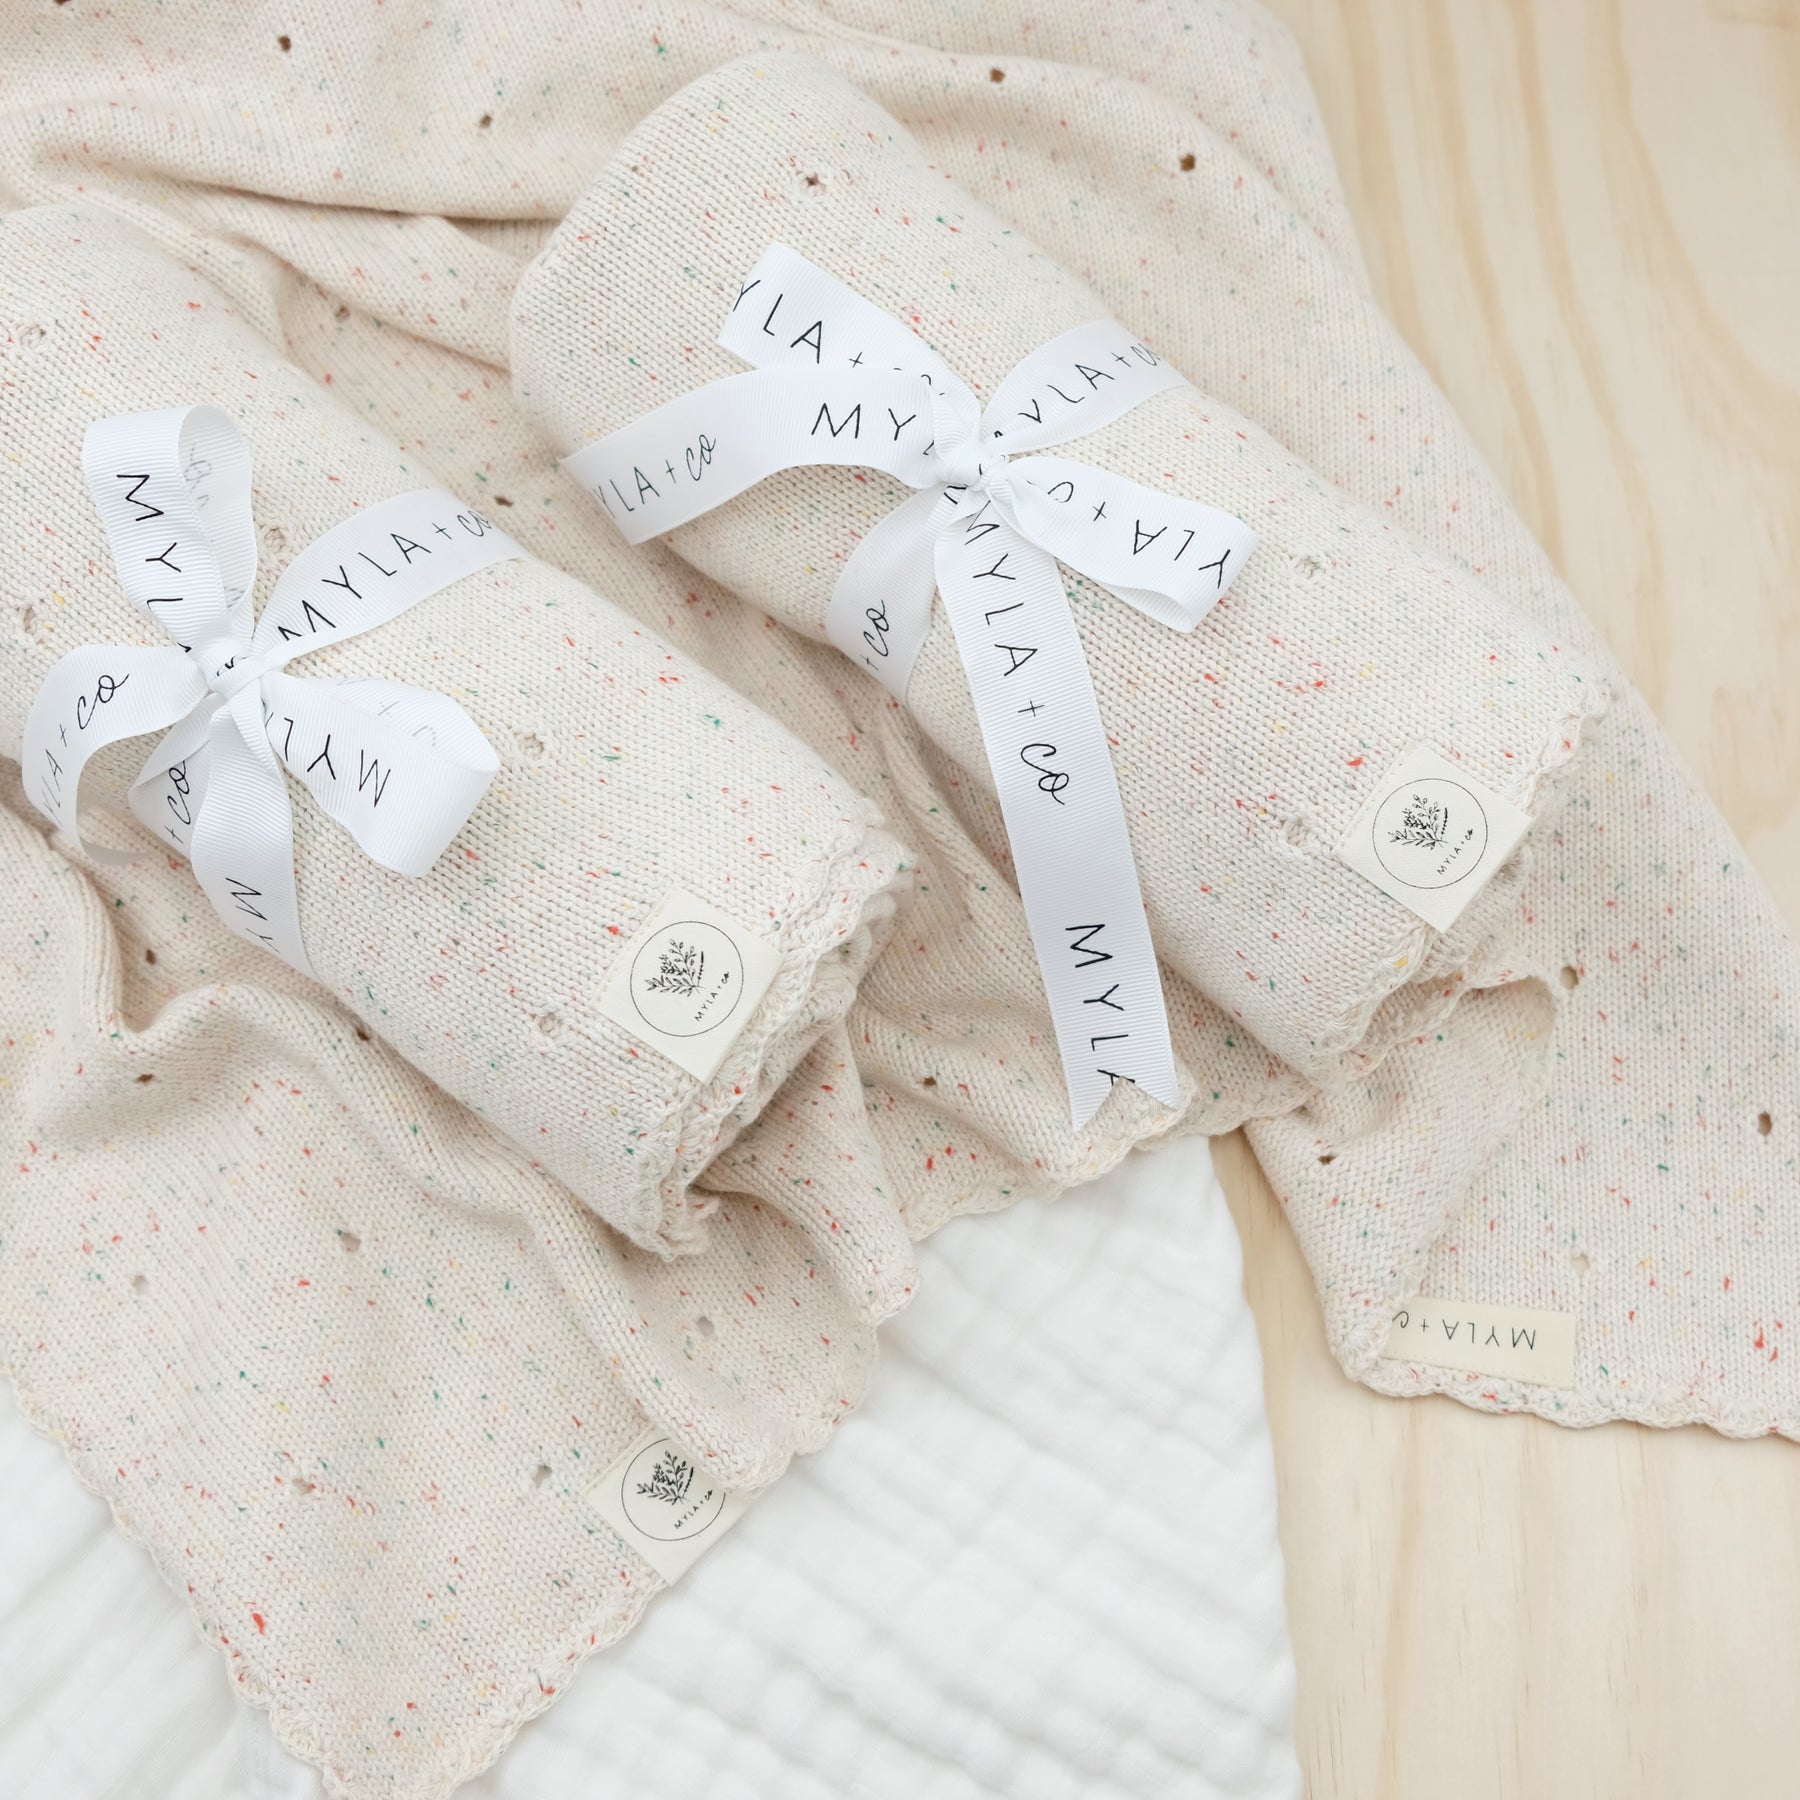 Rylee Knitted Blanket - Myla + Co.